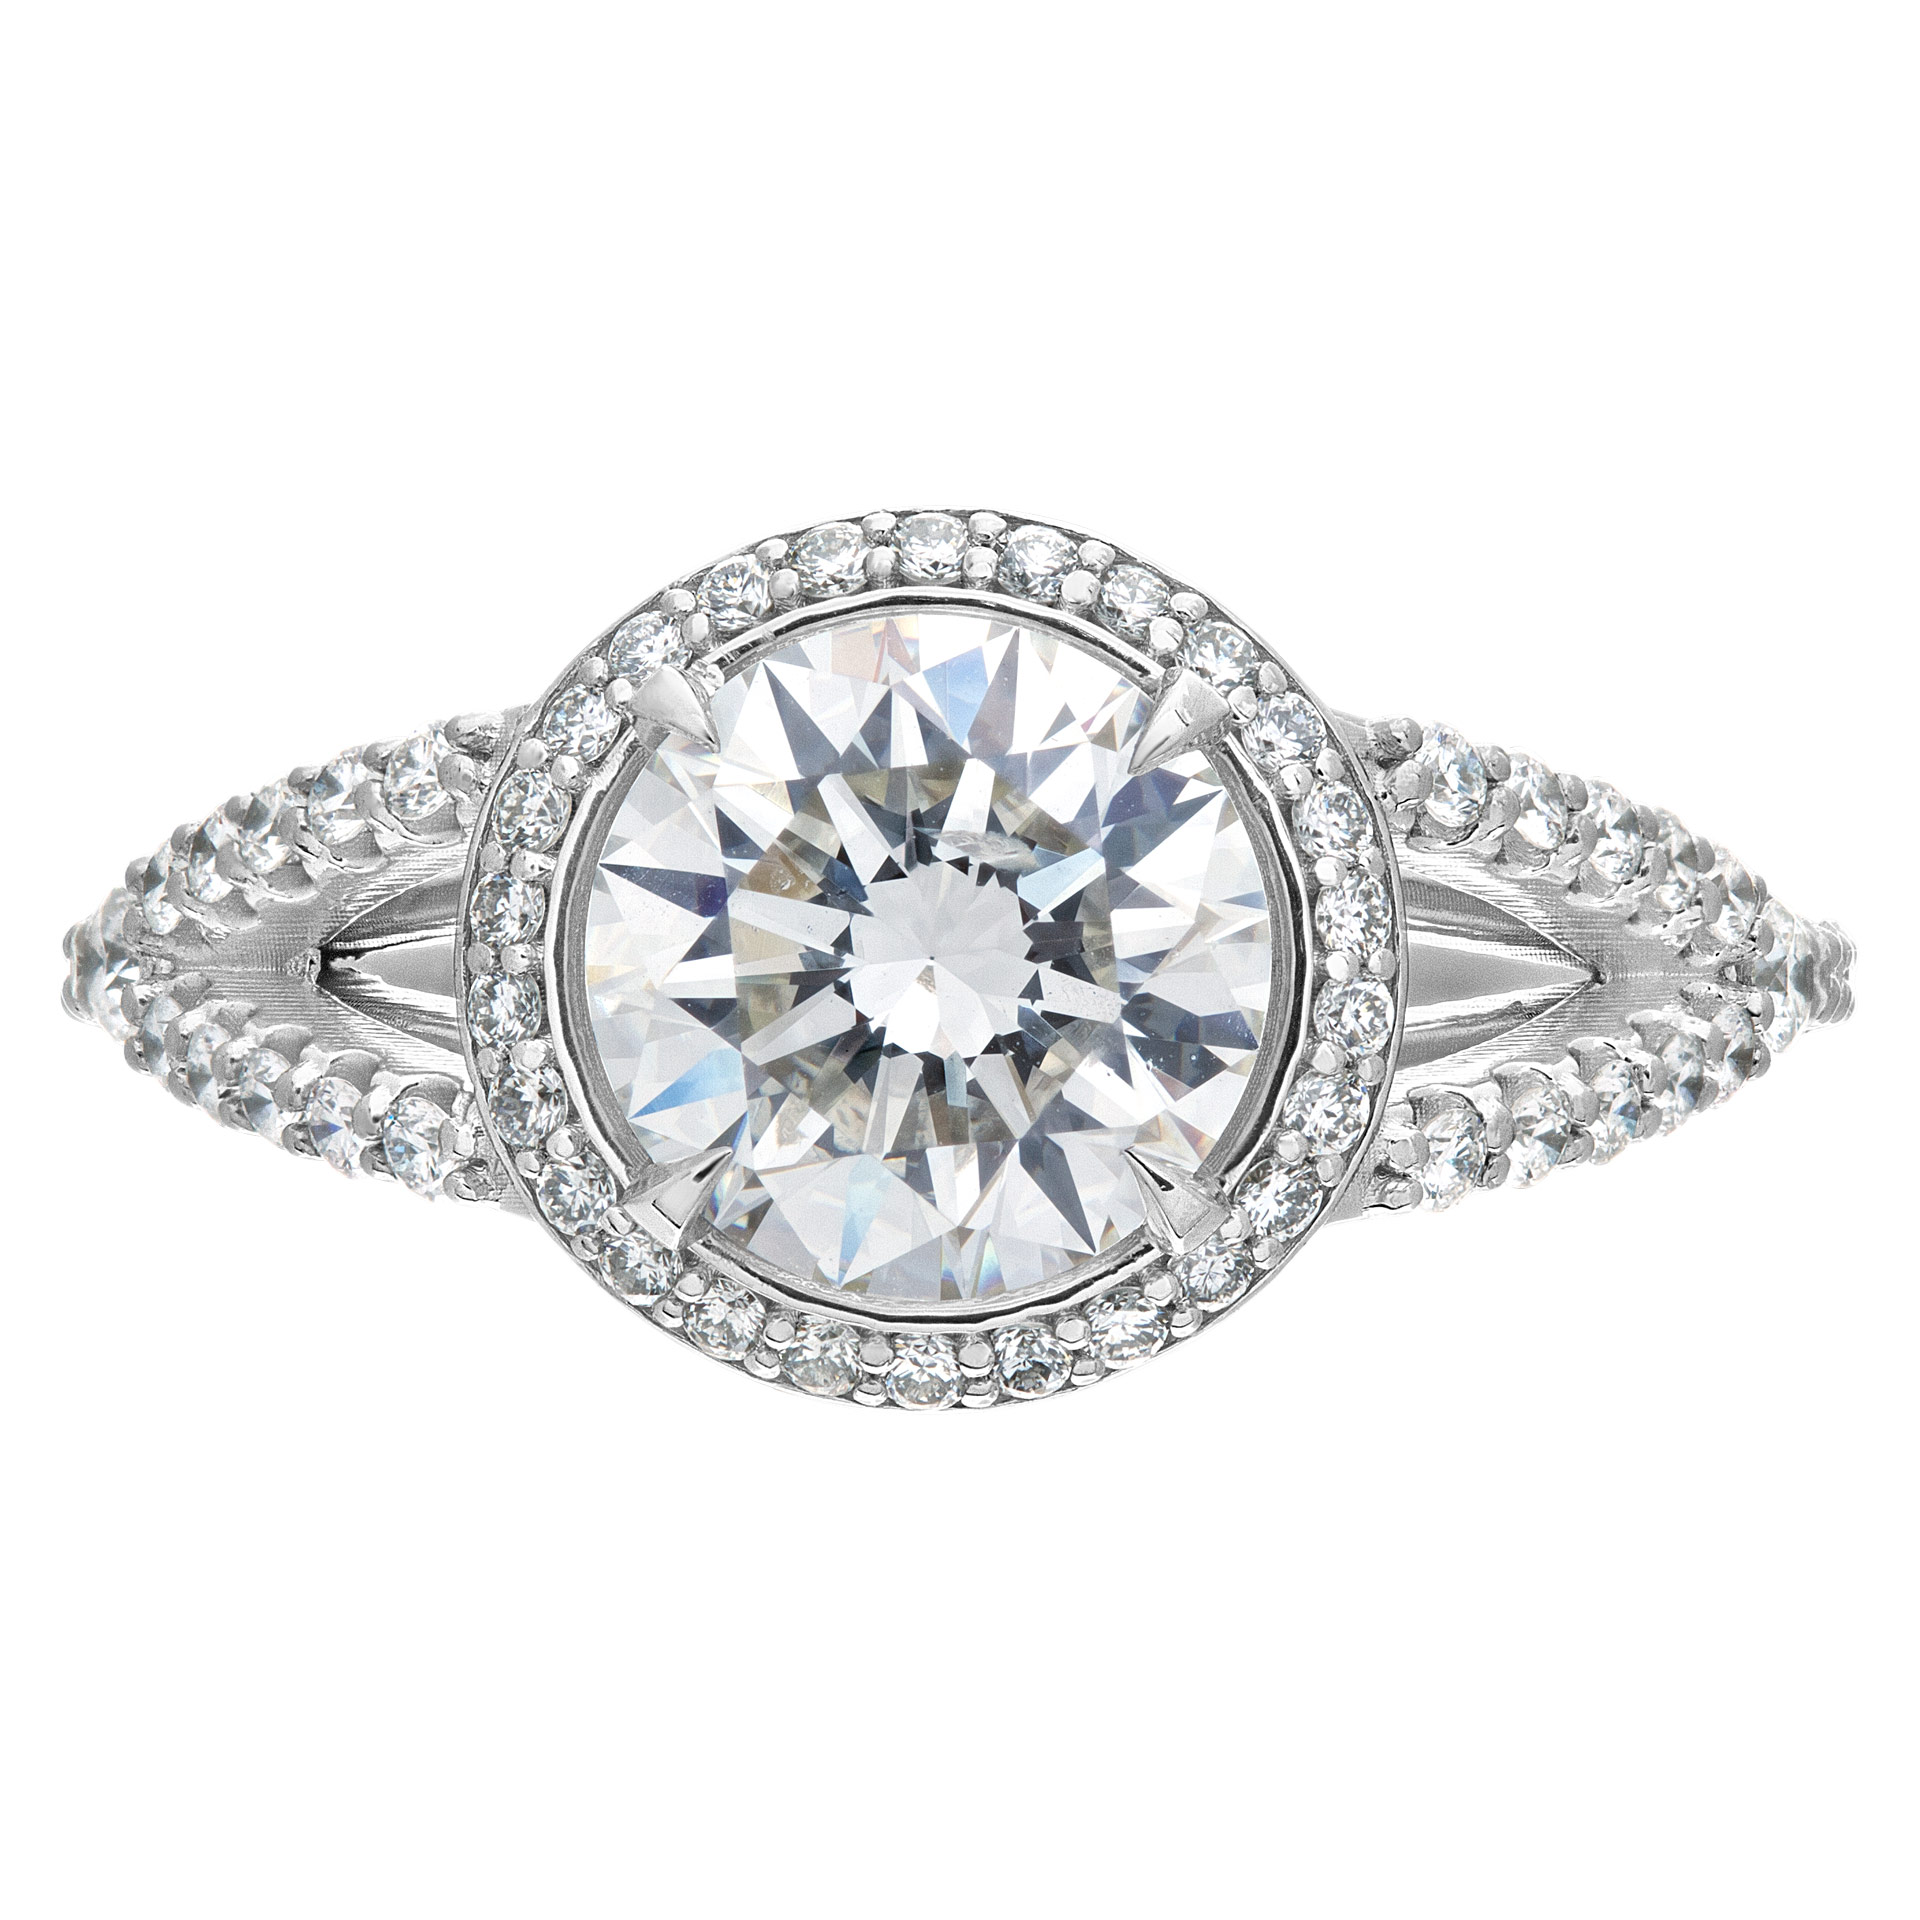 GIA cerified round brilliant cut diamond 1.81 carat (J color, SI2 clarity, Excellent symmetry) ring